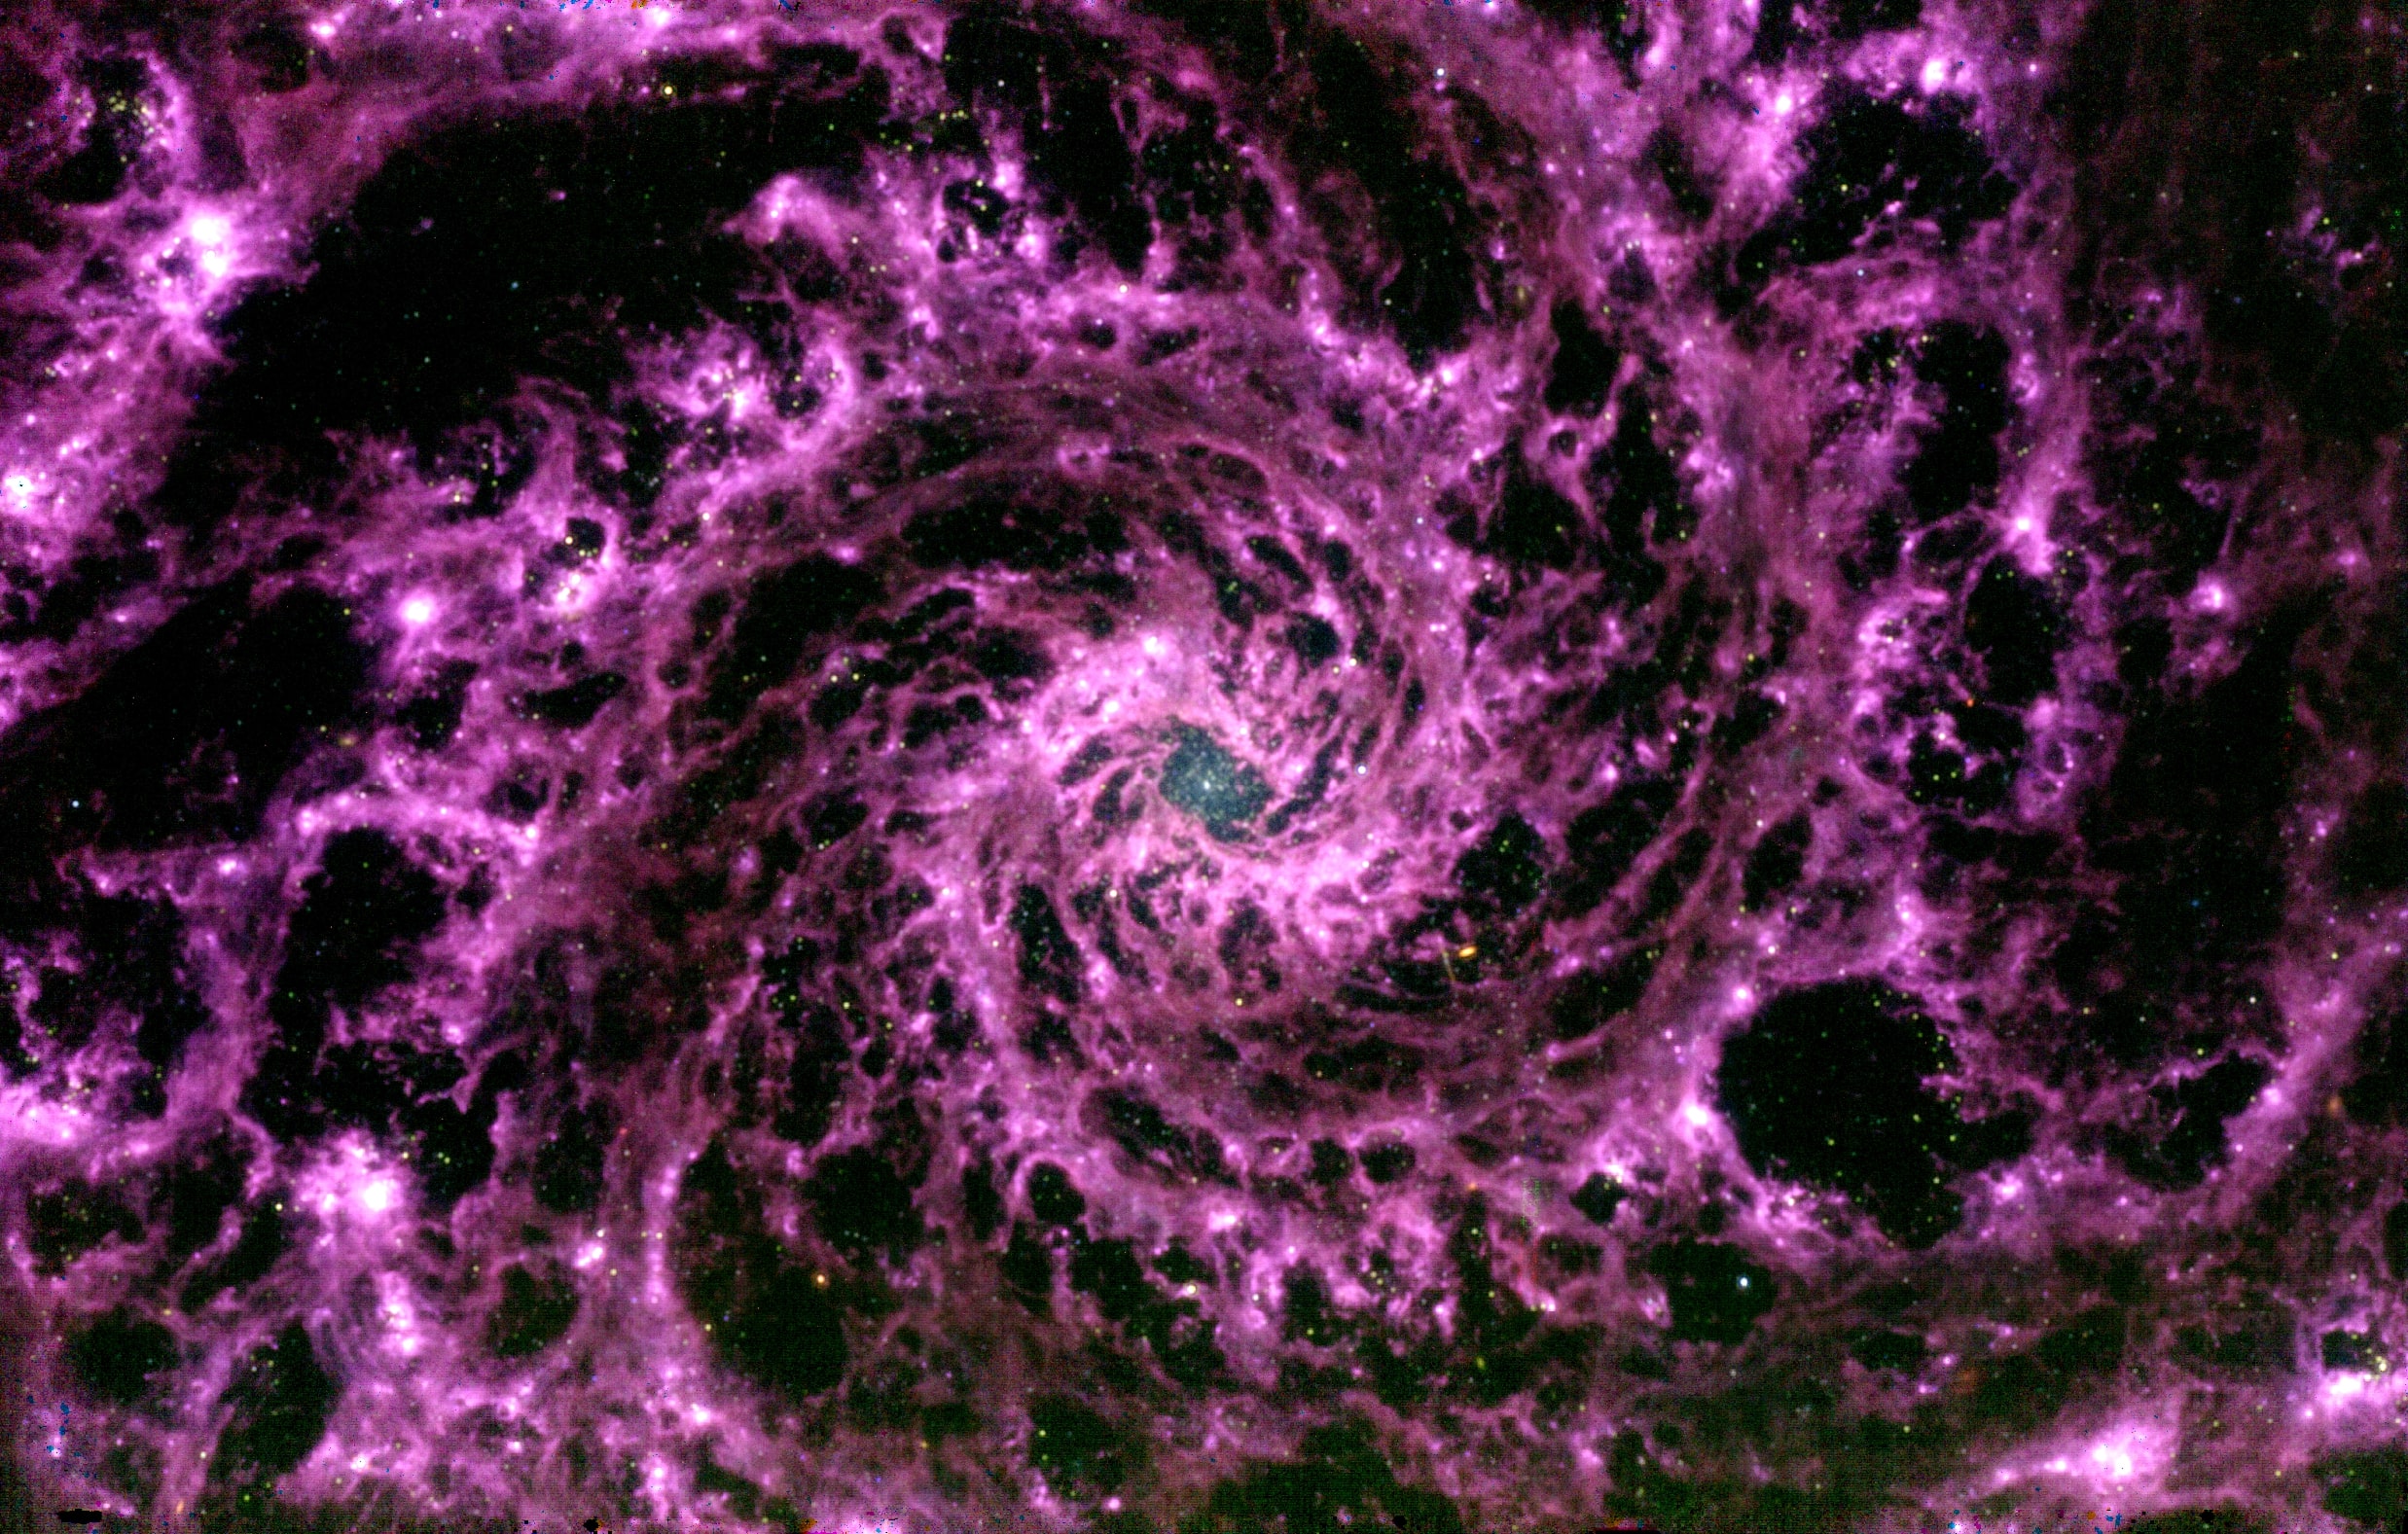 Amazing James Webb image looks like a wormhole